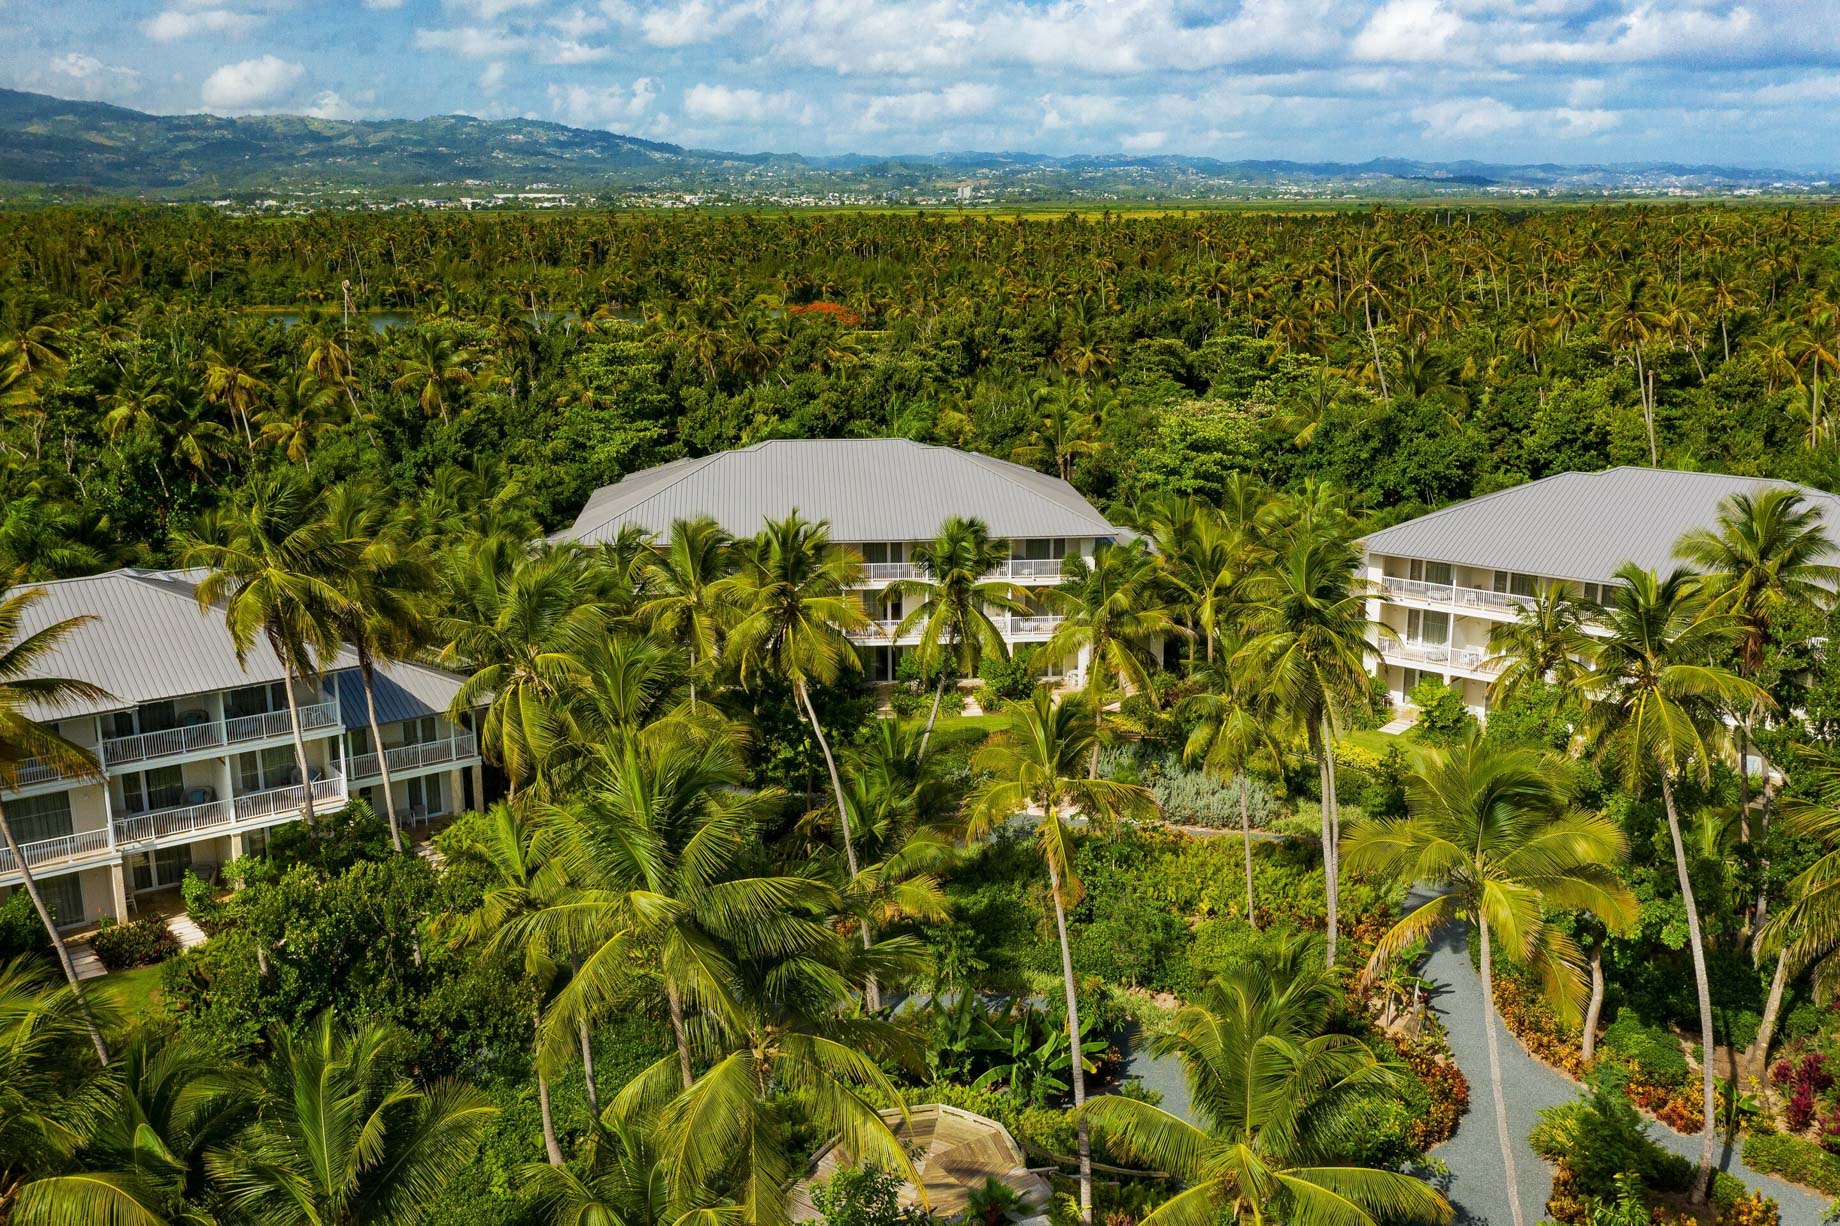 The St. Regis Bahia Beach Resort - Rio Grande, Puerto Rico - Resort Exterior Aerial View